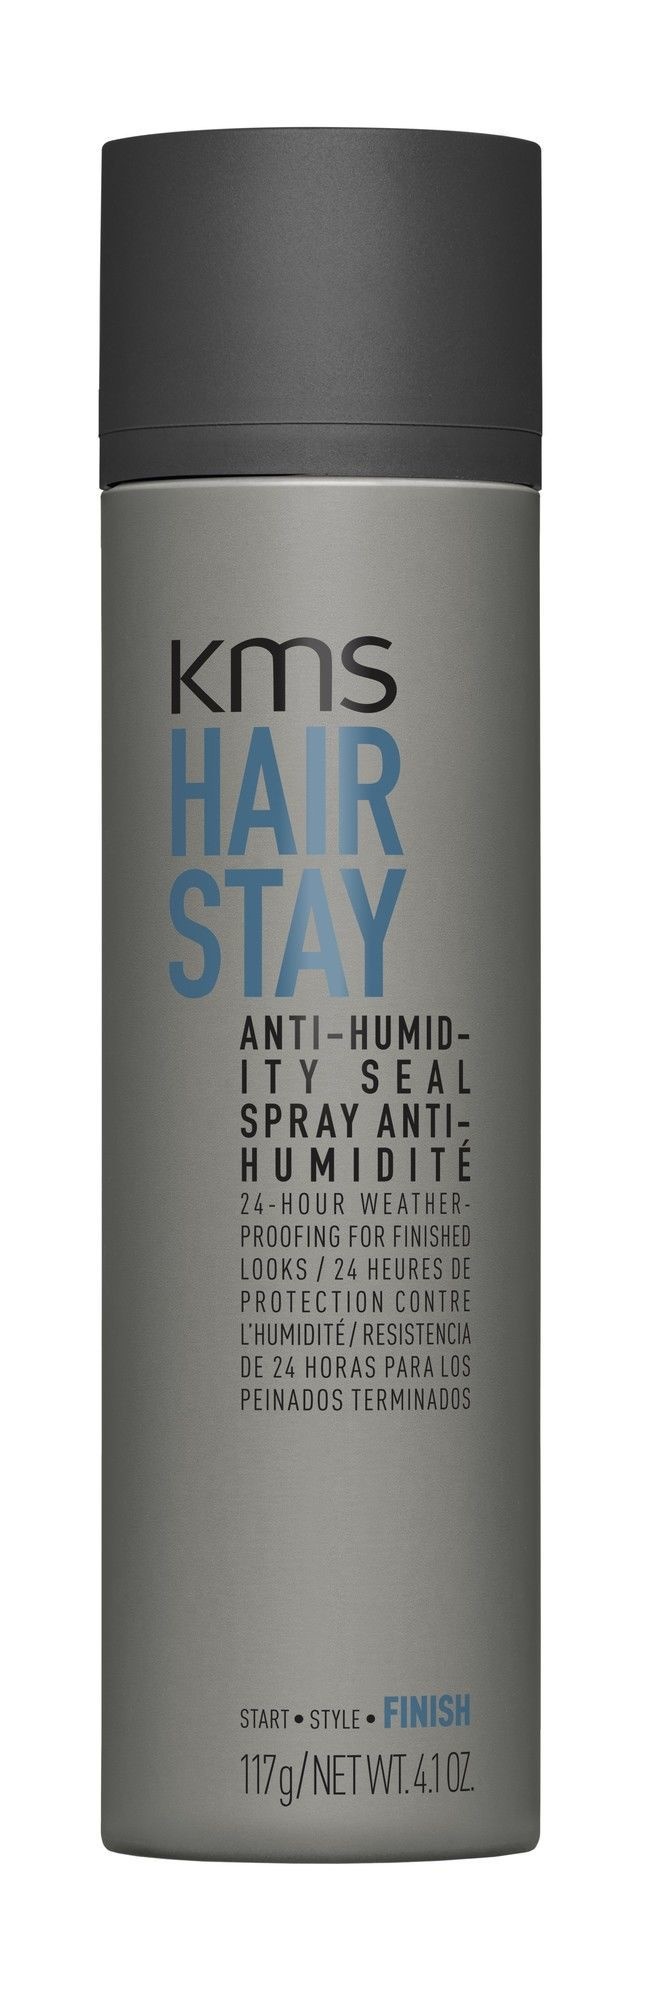 KMS California Hairstay AntiHumidity Seal 150ml